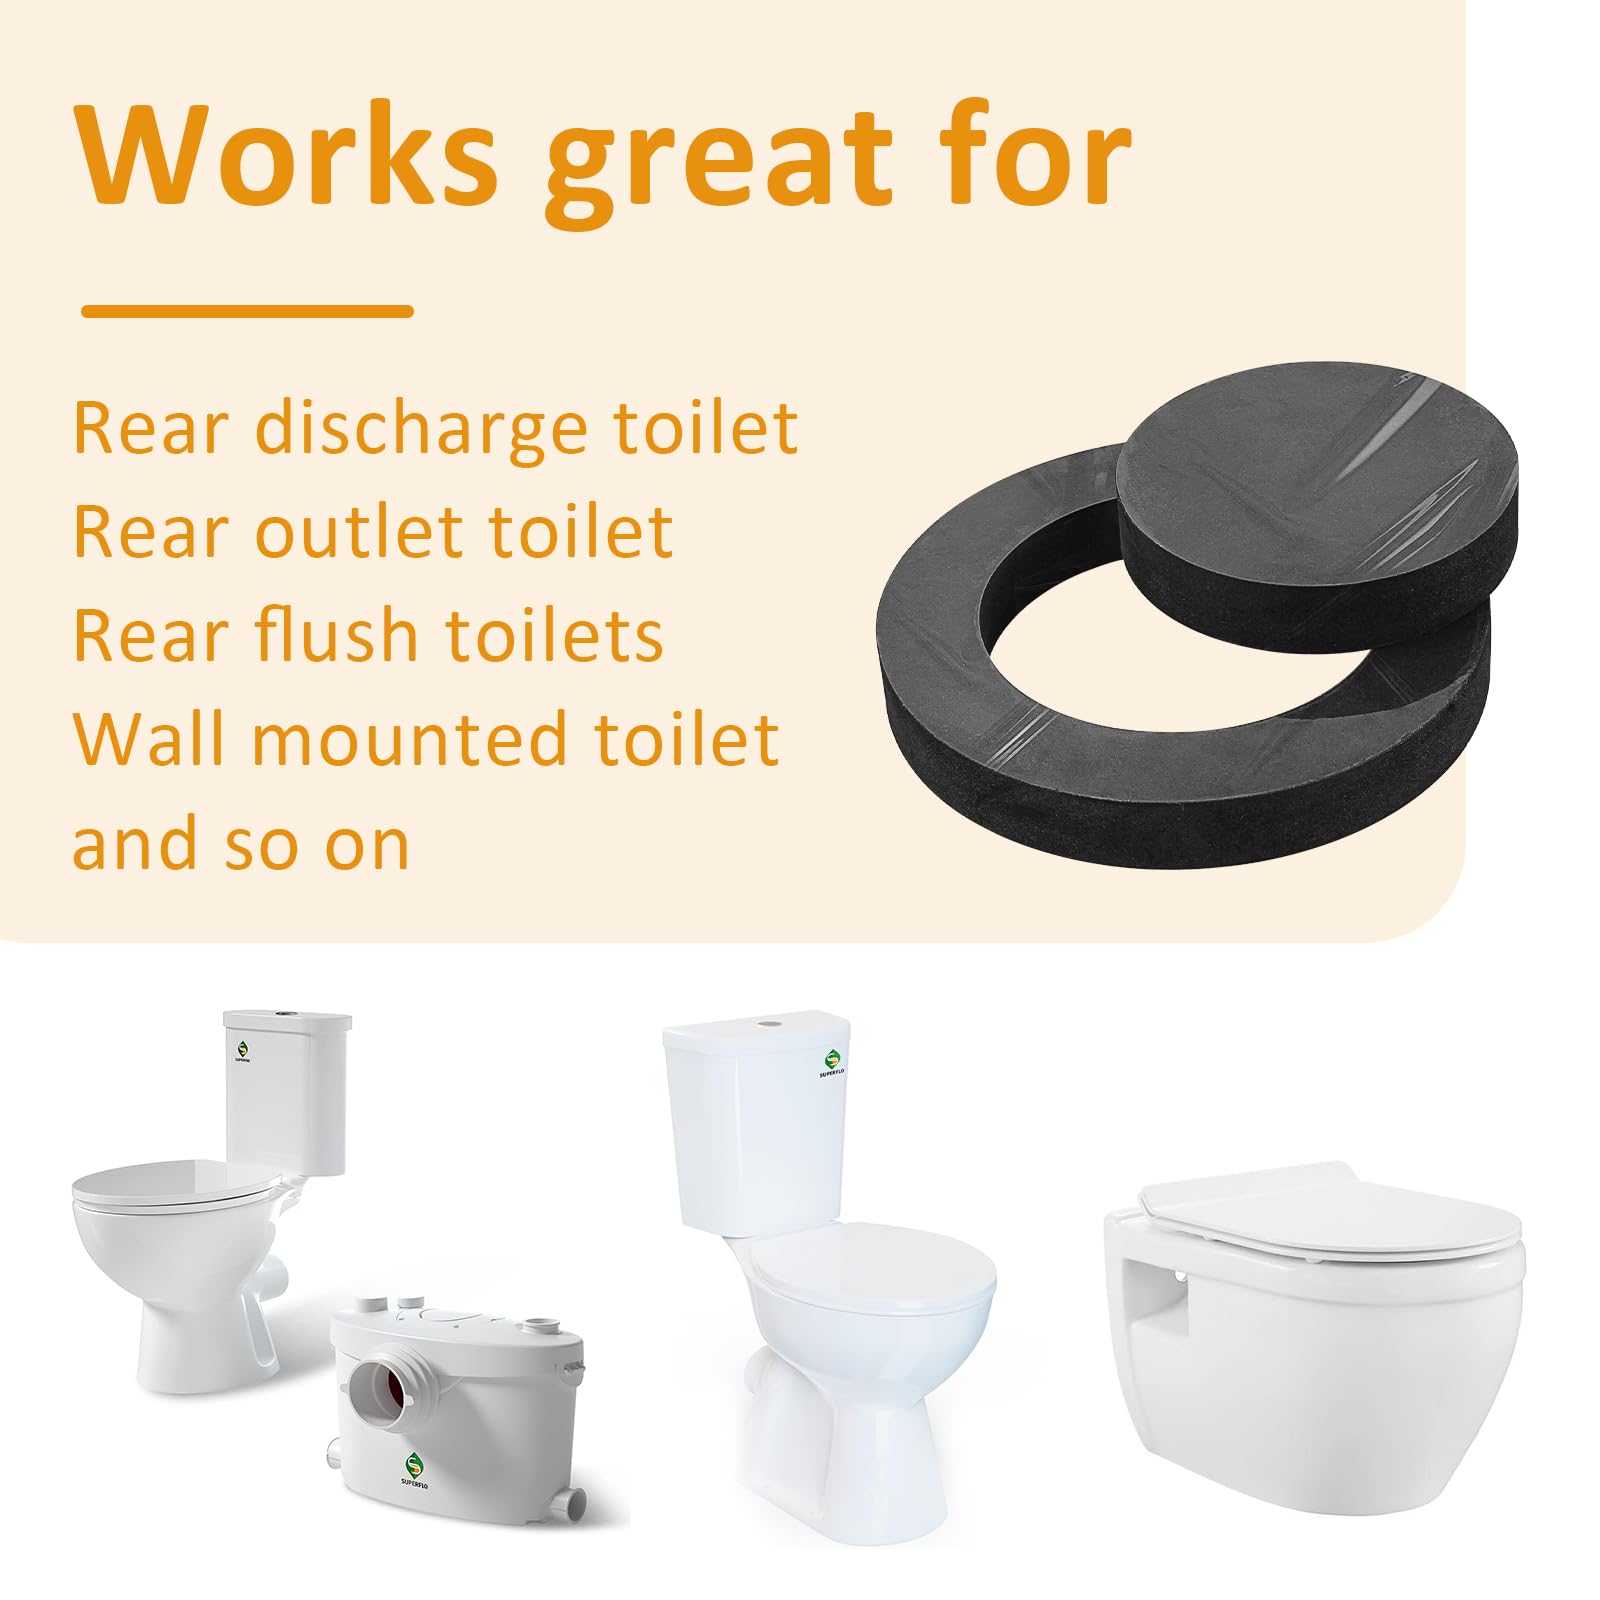 Wall Hung Toilet Gasket, Z1210-57 Neoprene Gasket, Fits Wall Hung Toilet Back Outlet Toilet Backflush Toilet Rear Discharge Toilet - Black